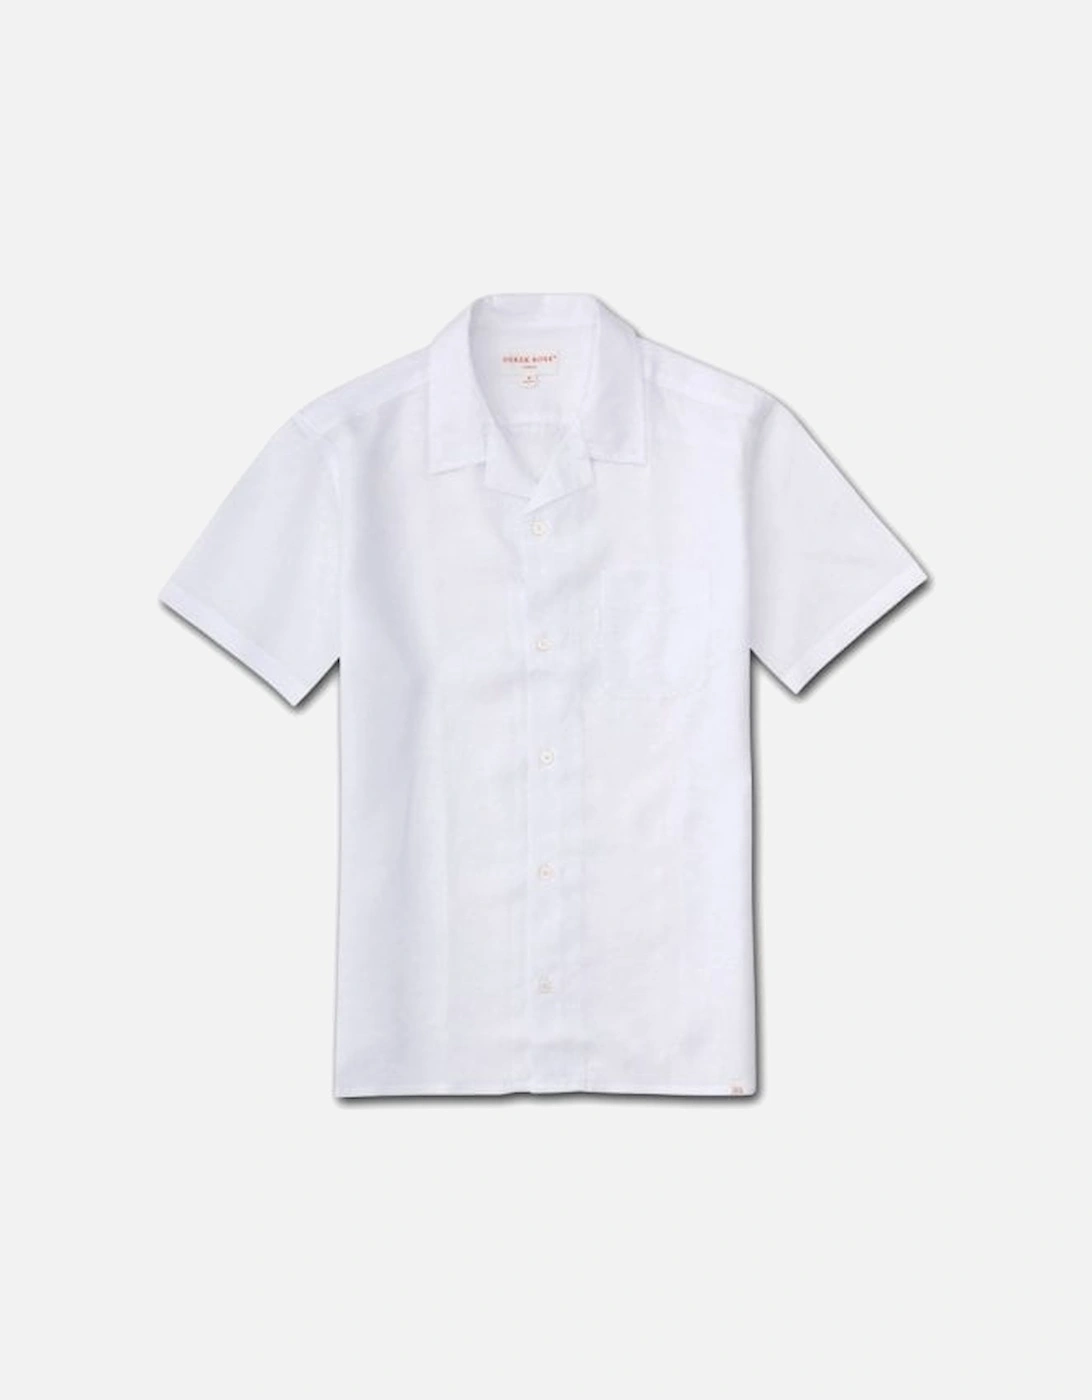 Monaco Pure Linen Short-Sleeve Shirt, White, 9 of 8